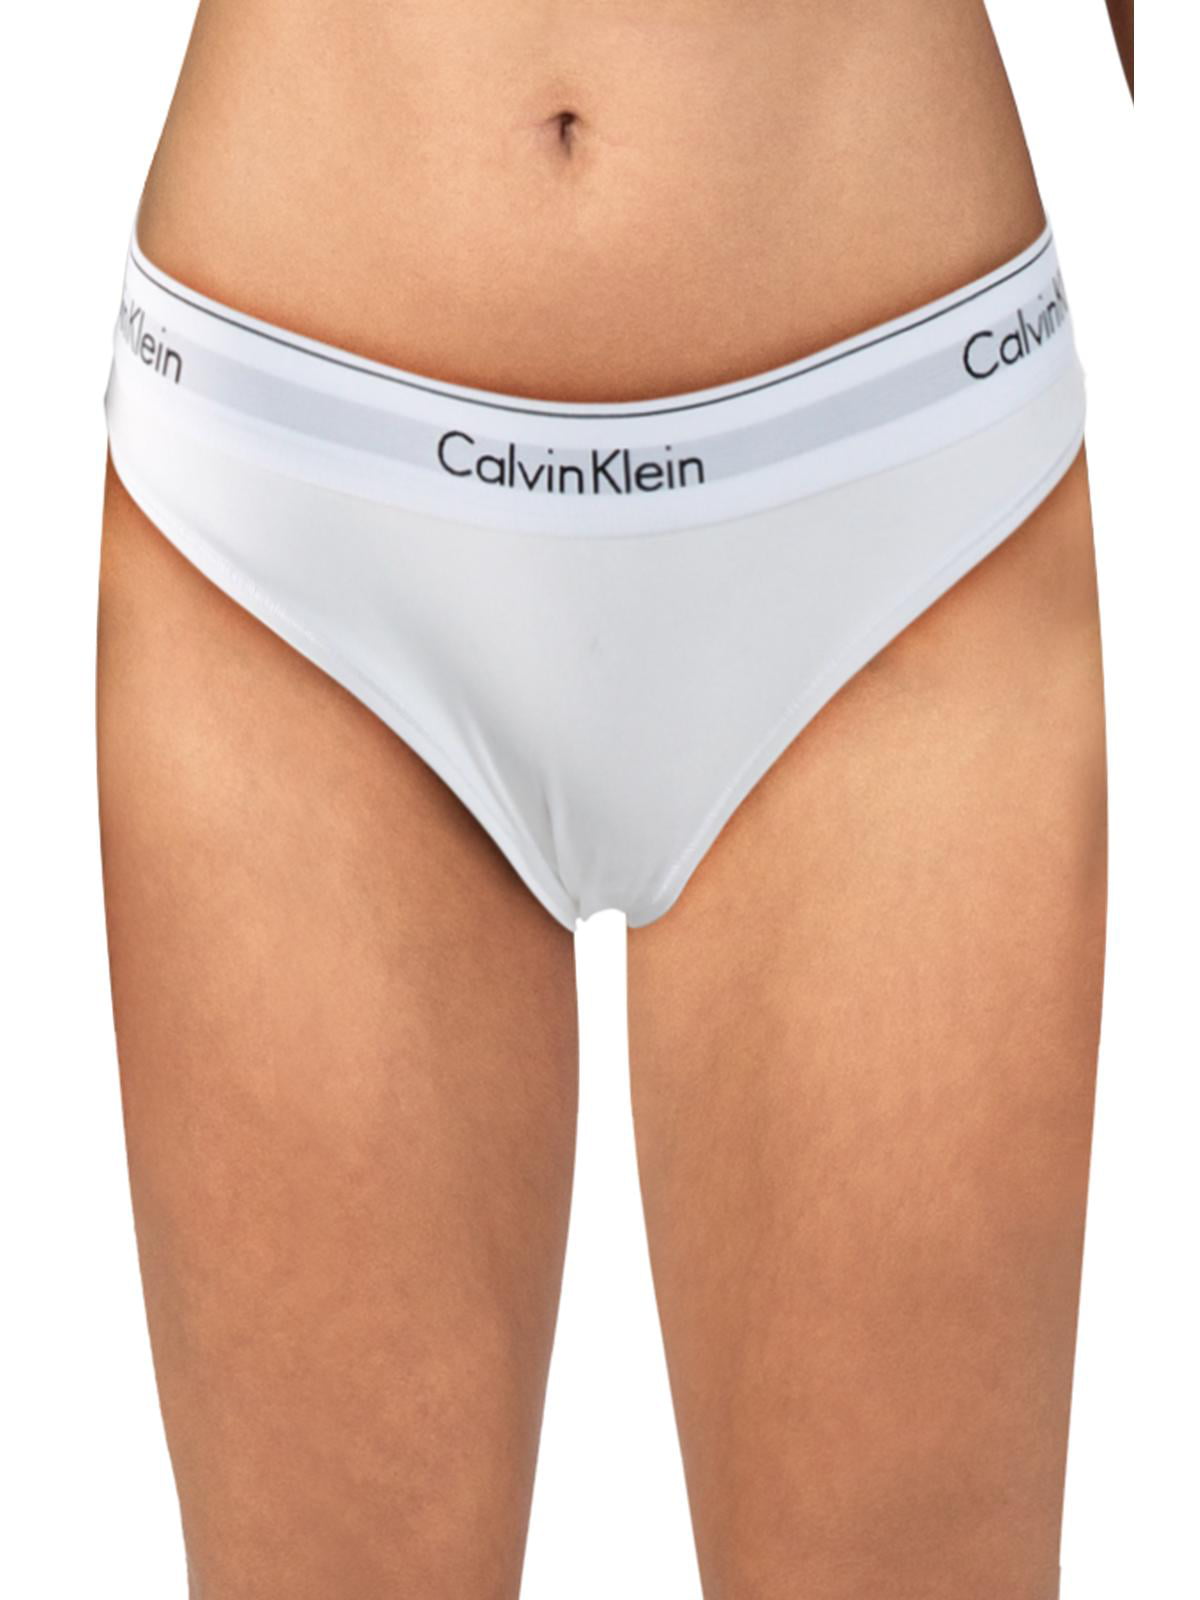 Calvin Klein Womens Pride Rainbow Underwear Lingerie Bikini Panty White M -  